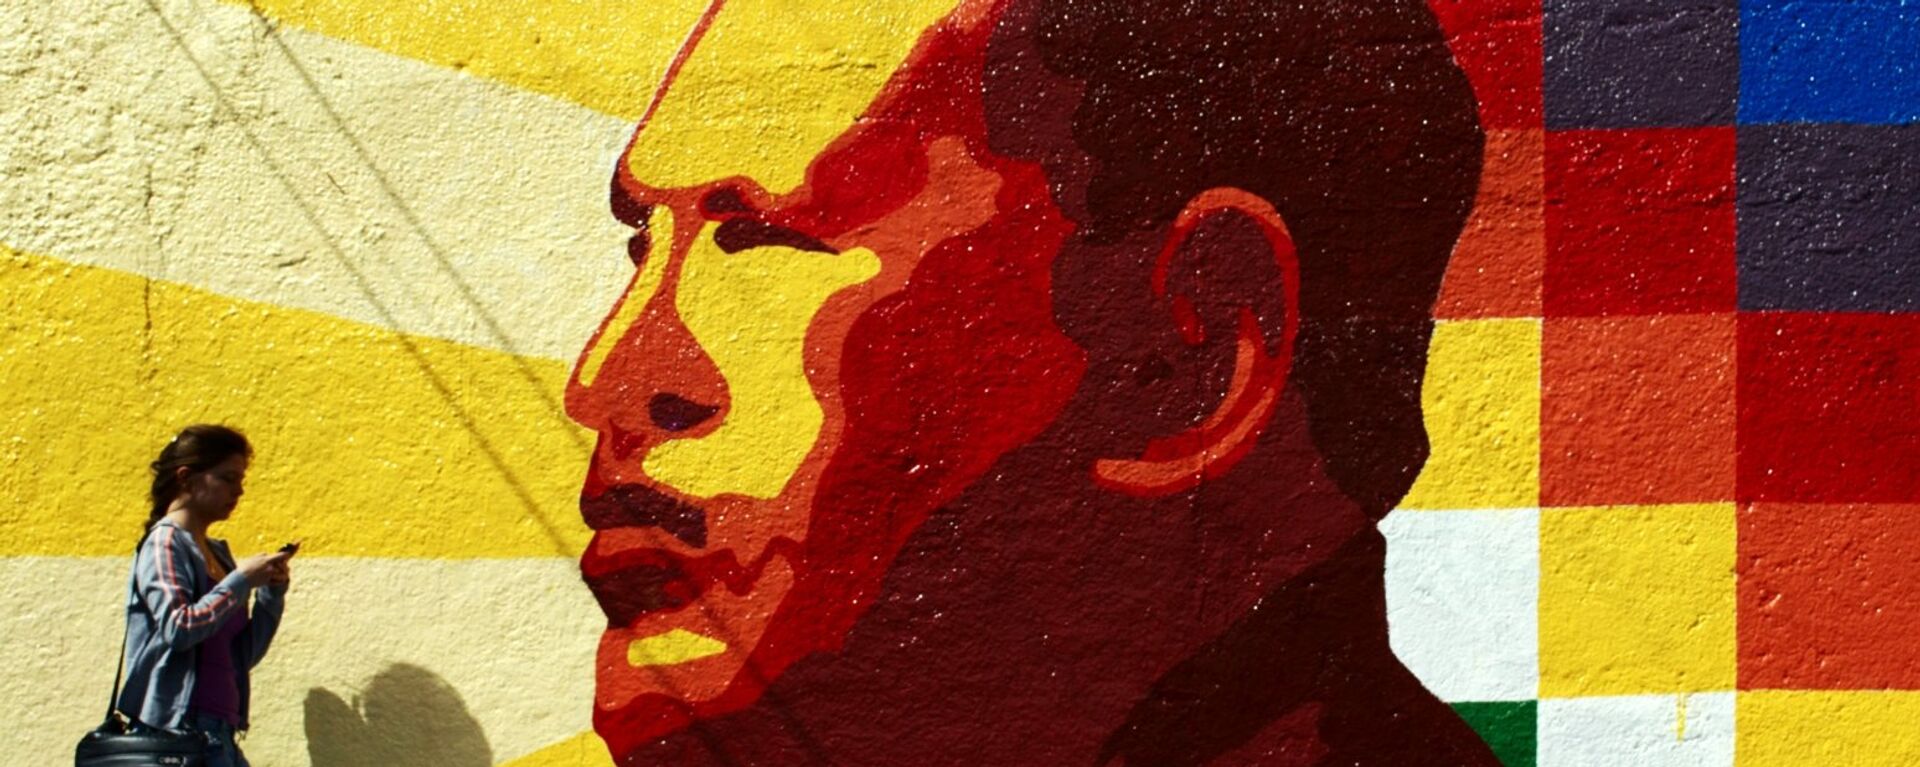 Graffiti con un retrato de Hugo Chávez - Sputnik Mundo, 1920, 05.07.2019